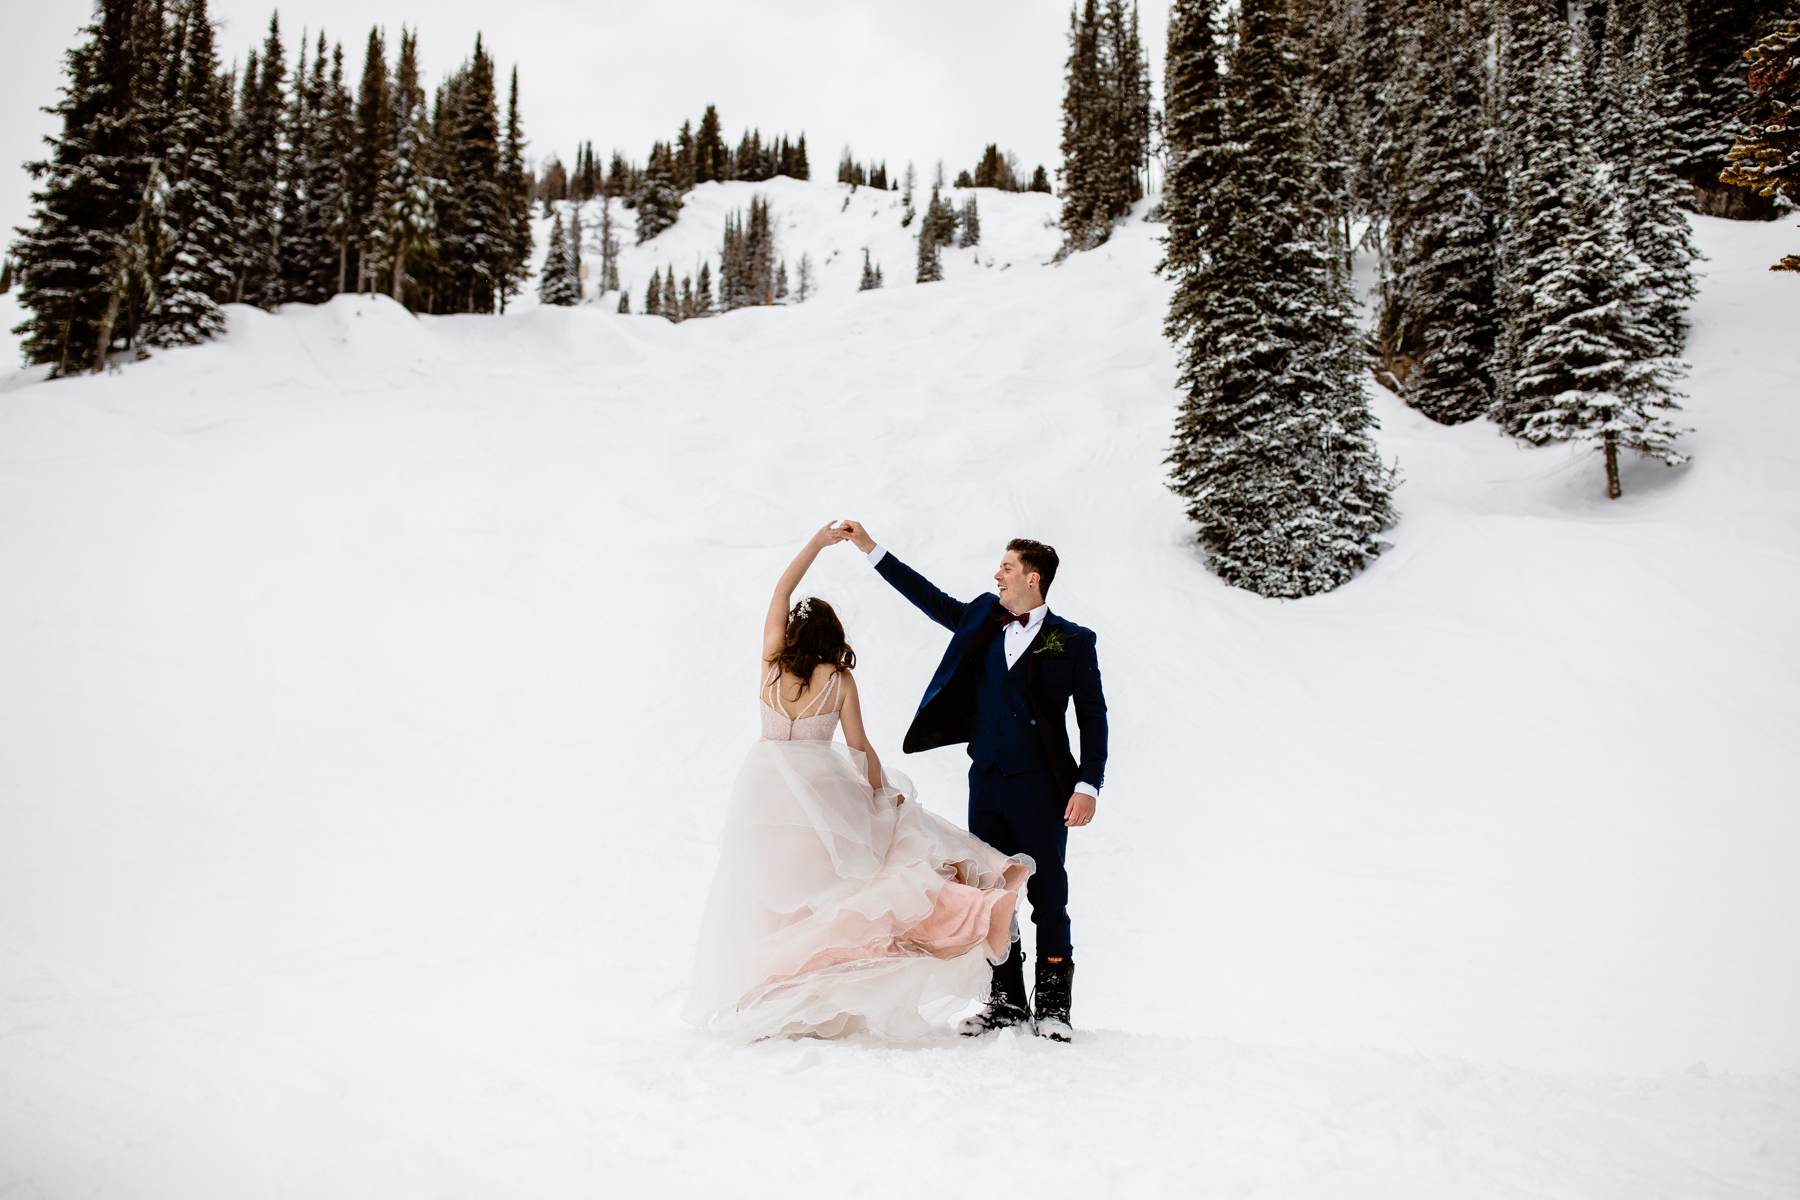 Ski Wedding Photos at Sunshine Village in Banff - Image 36